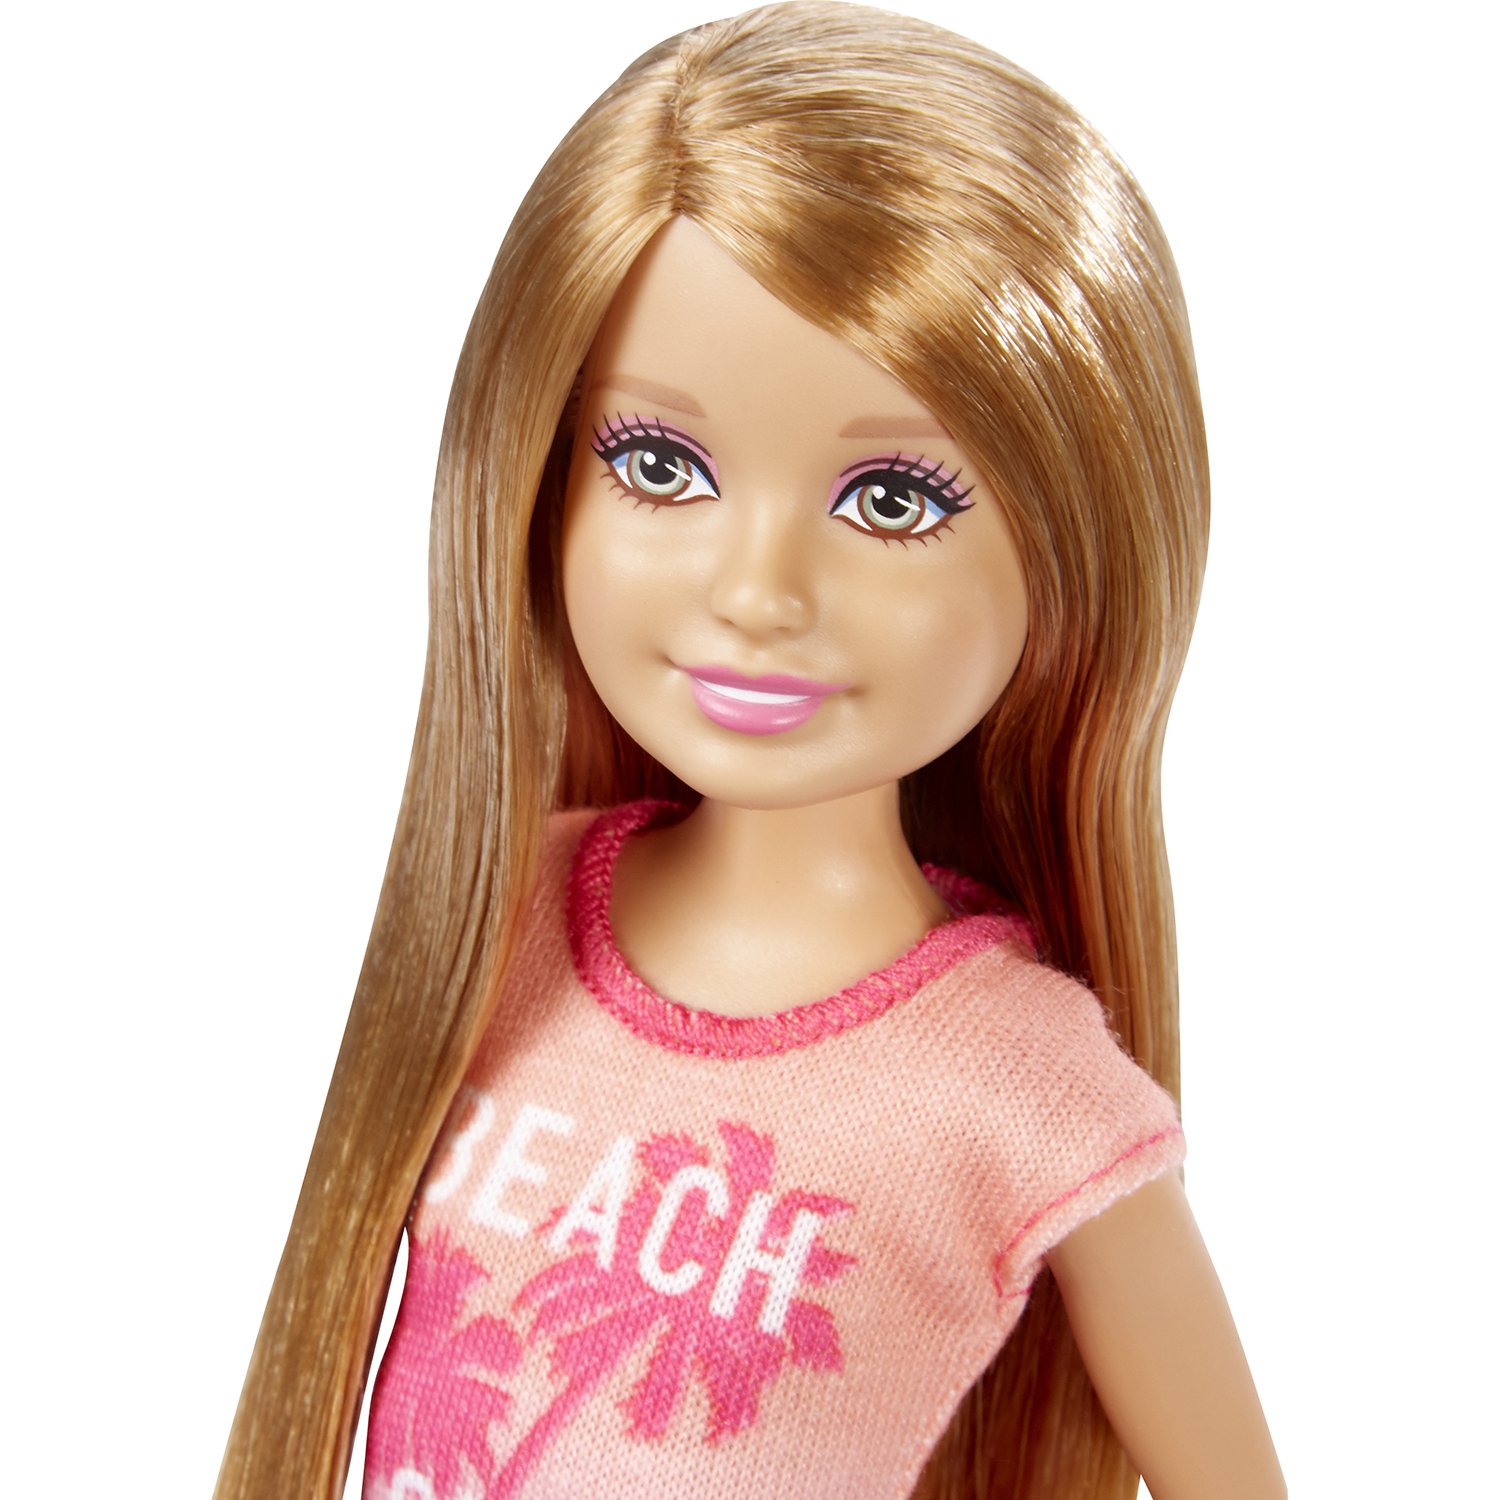 Кукла Barbie Стейси на самокате, DVX57